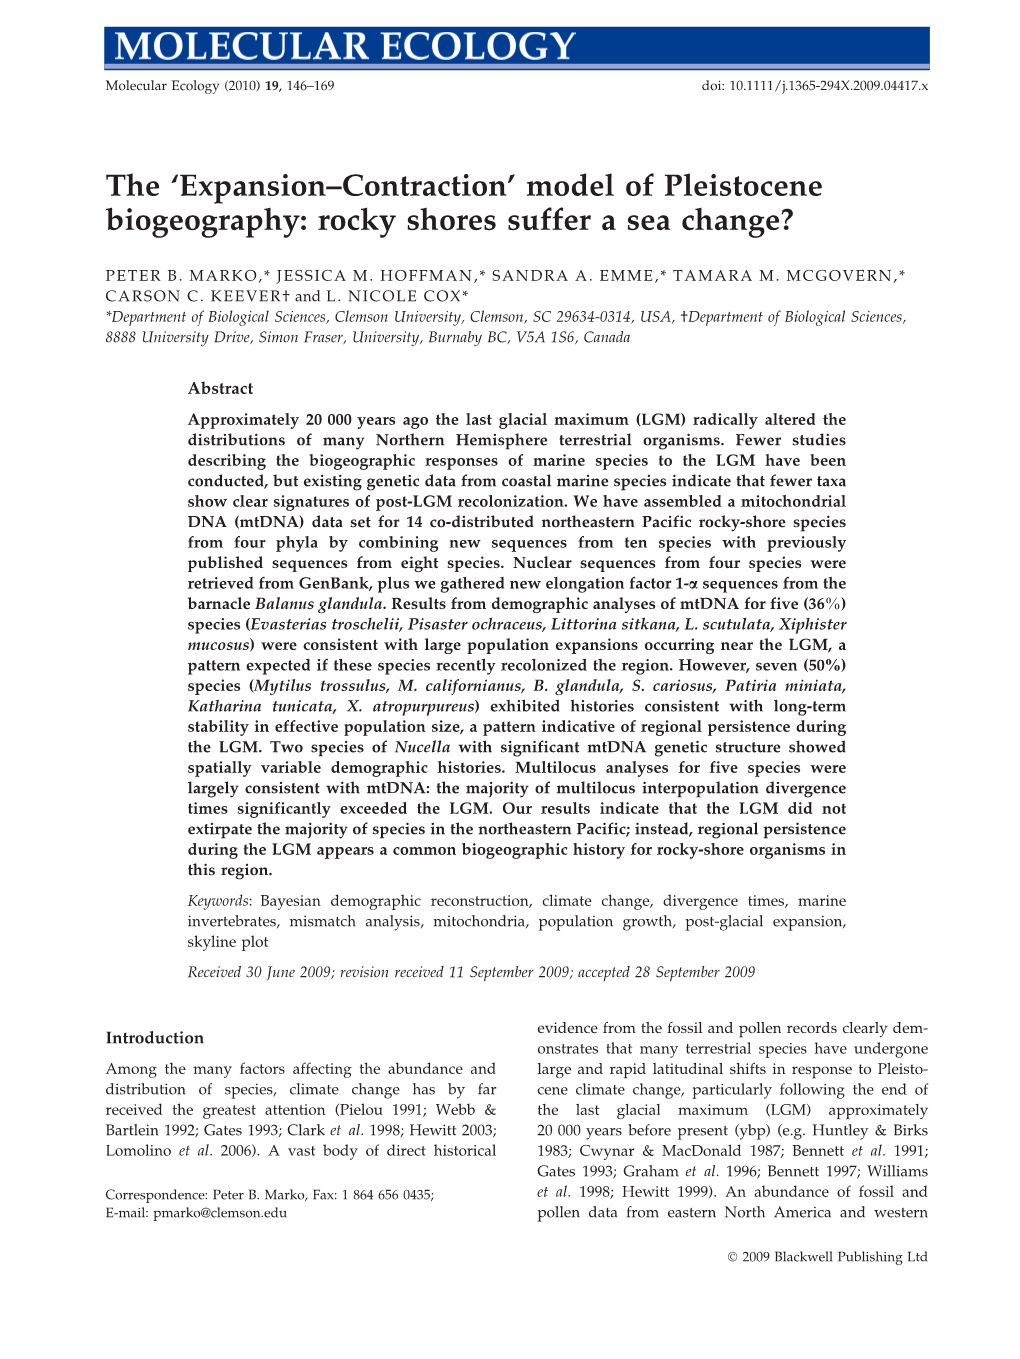 Model of Pleistocene Biogeography: Rocky Shores Suffer a Sea Change?